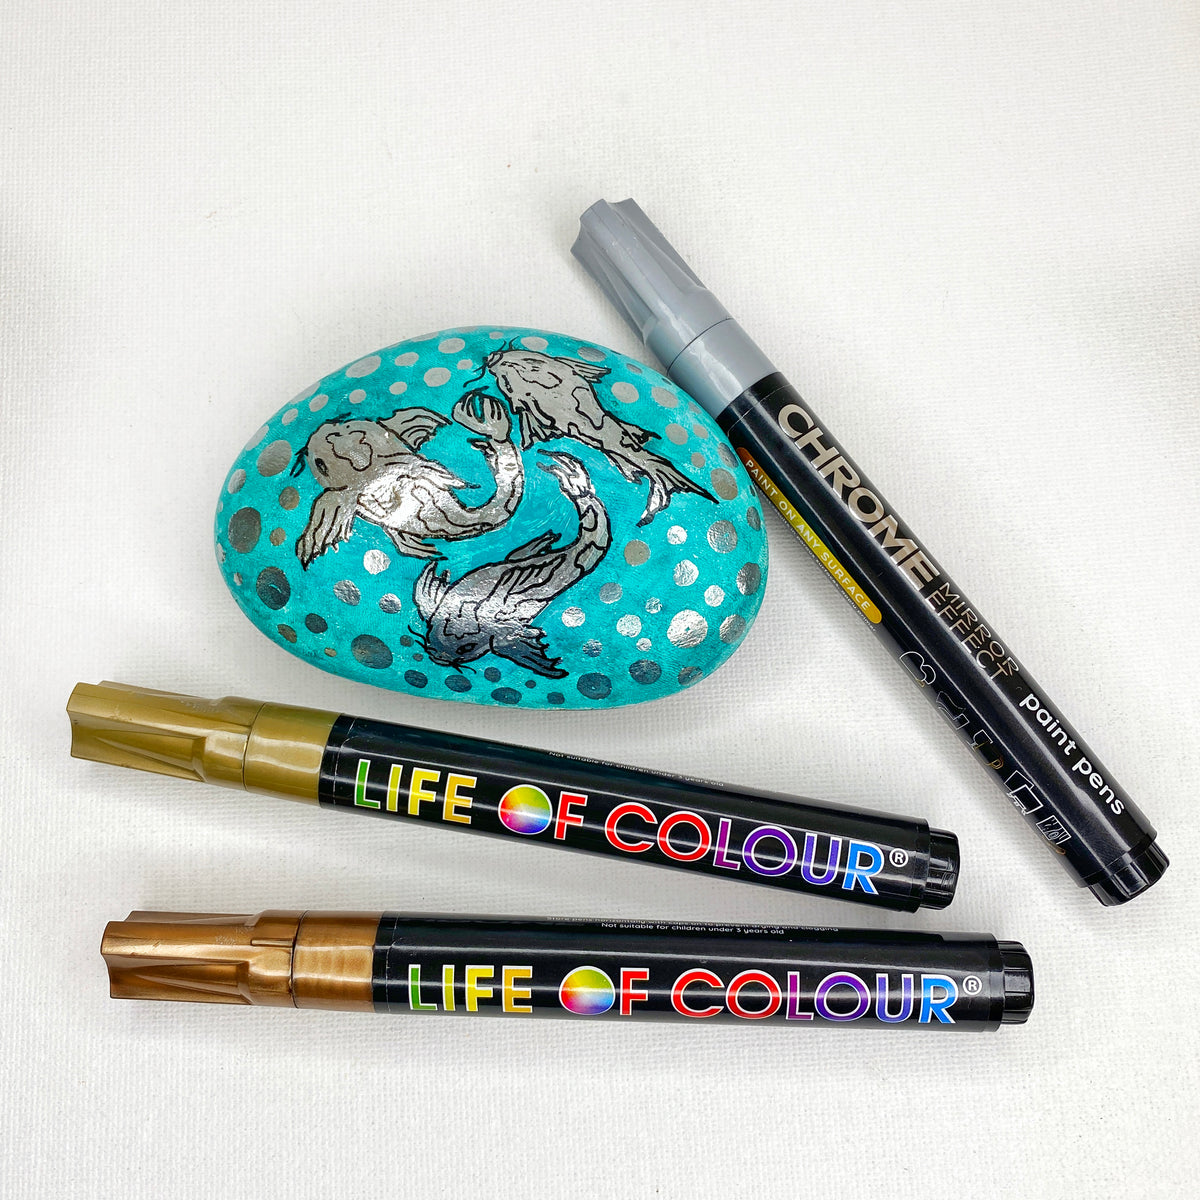 Mirror Markers  Chrome Paint Pens - Life of Colour